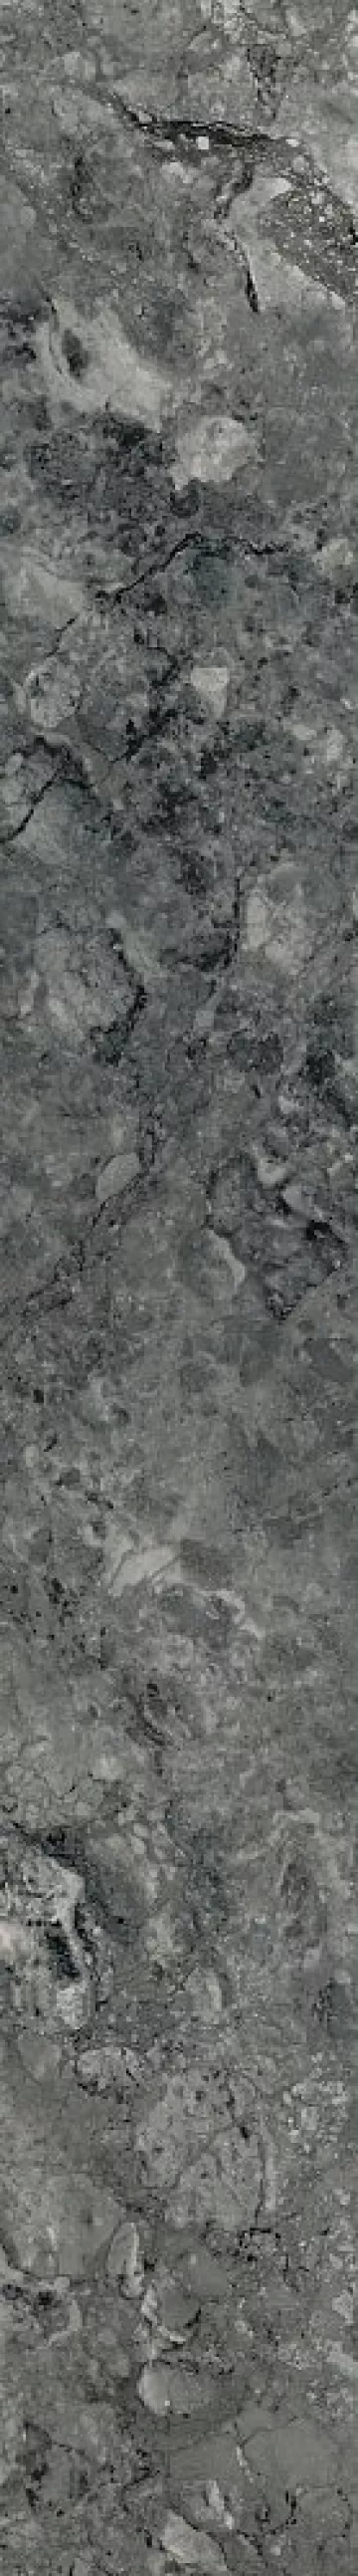 Vitra Плинтус MarbleSet Иллюжн Темно-серый Матовый 7Рек 7.5х60 K951315R0001VTE0